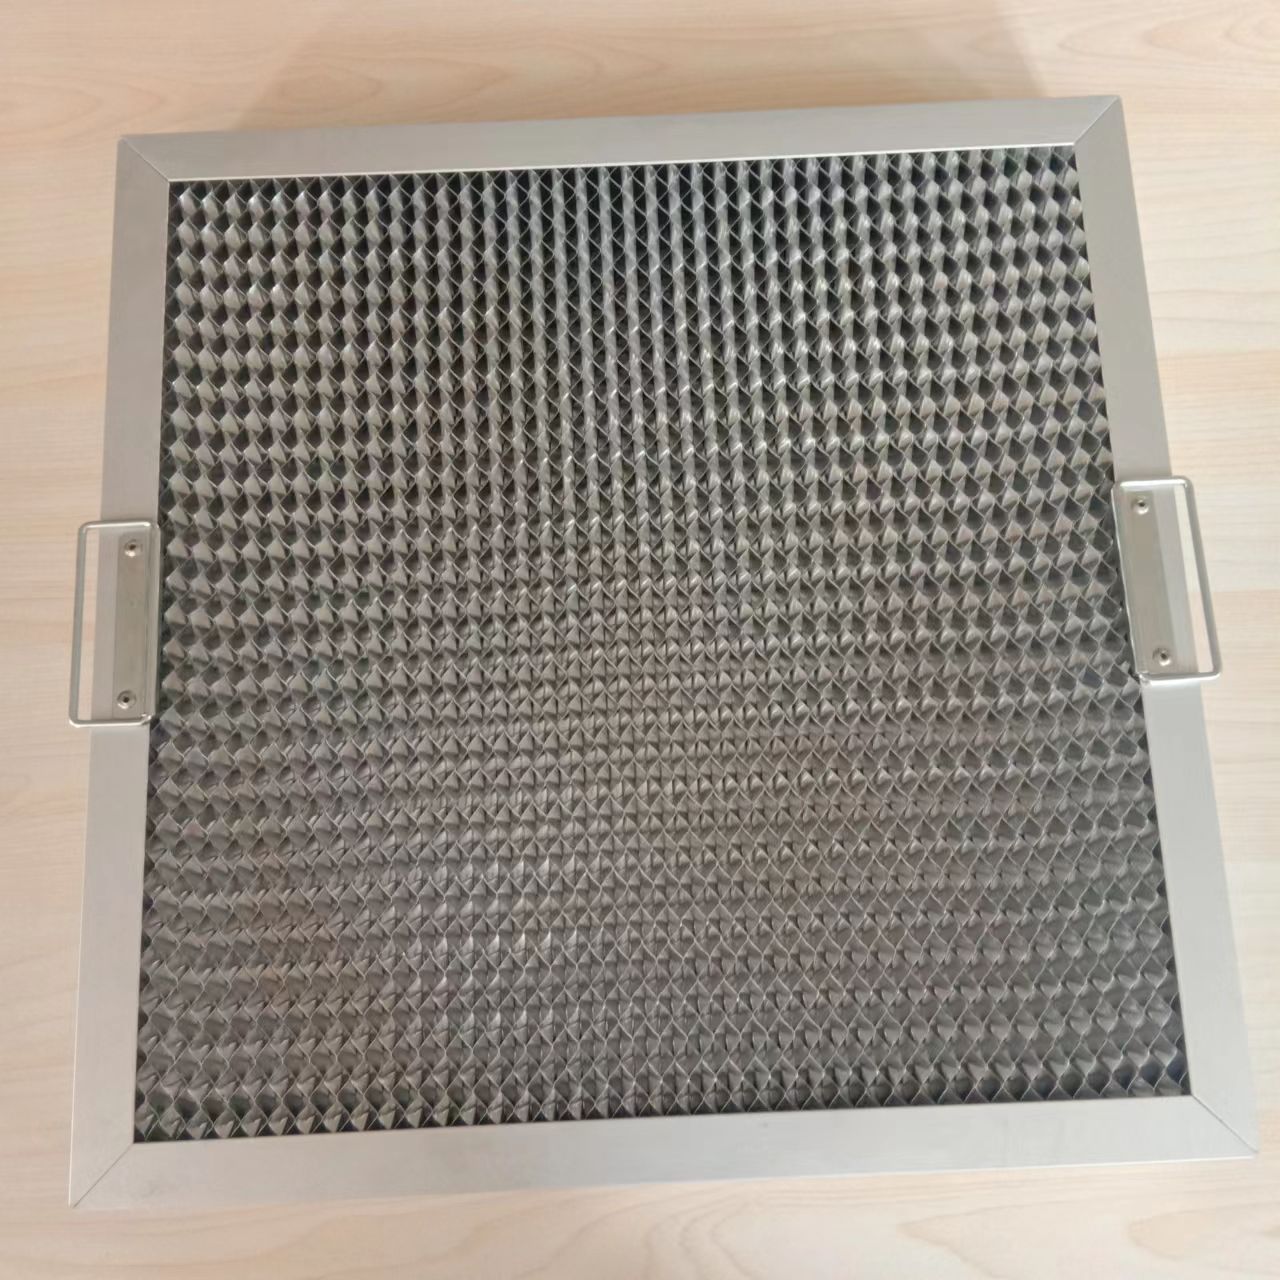 Aluminum honeycomb grease filter